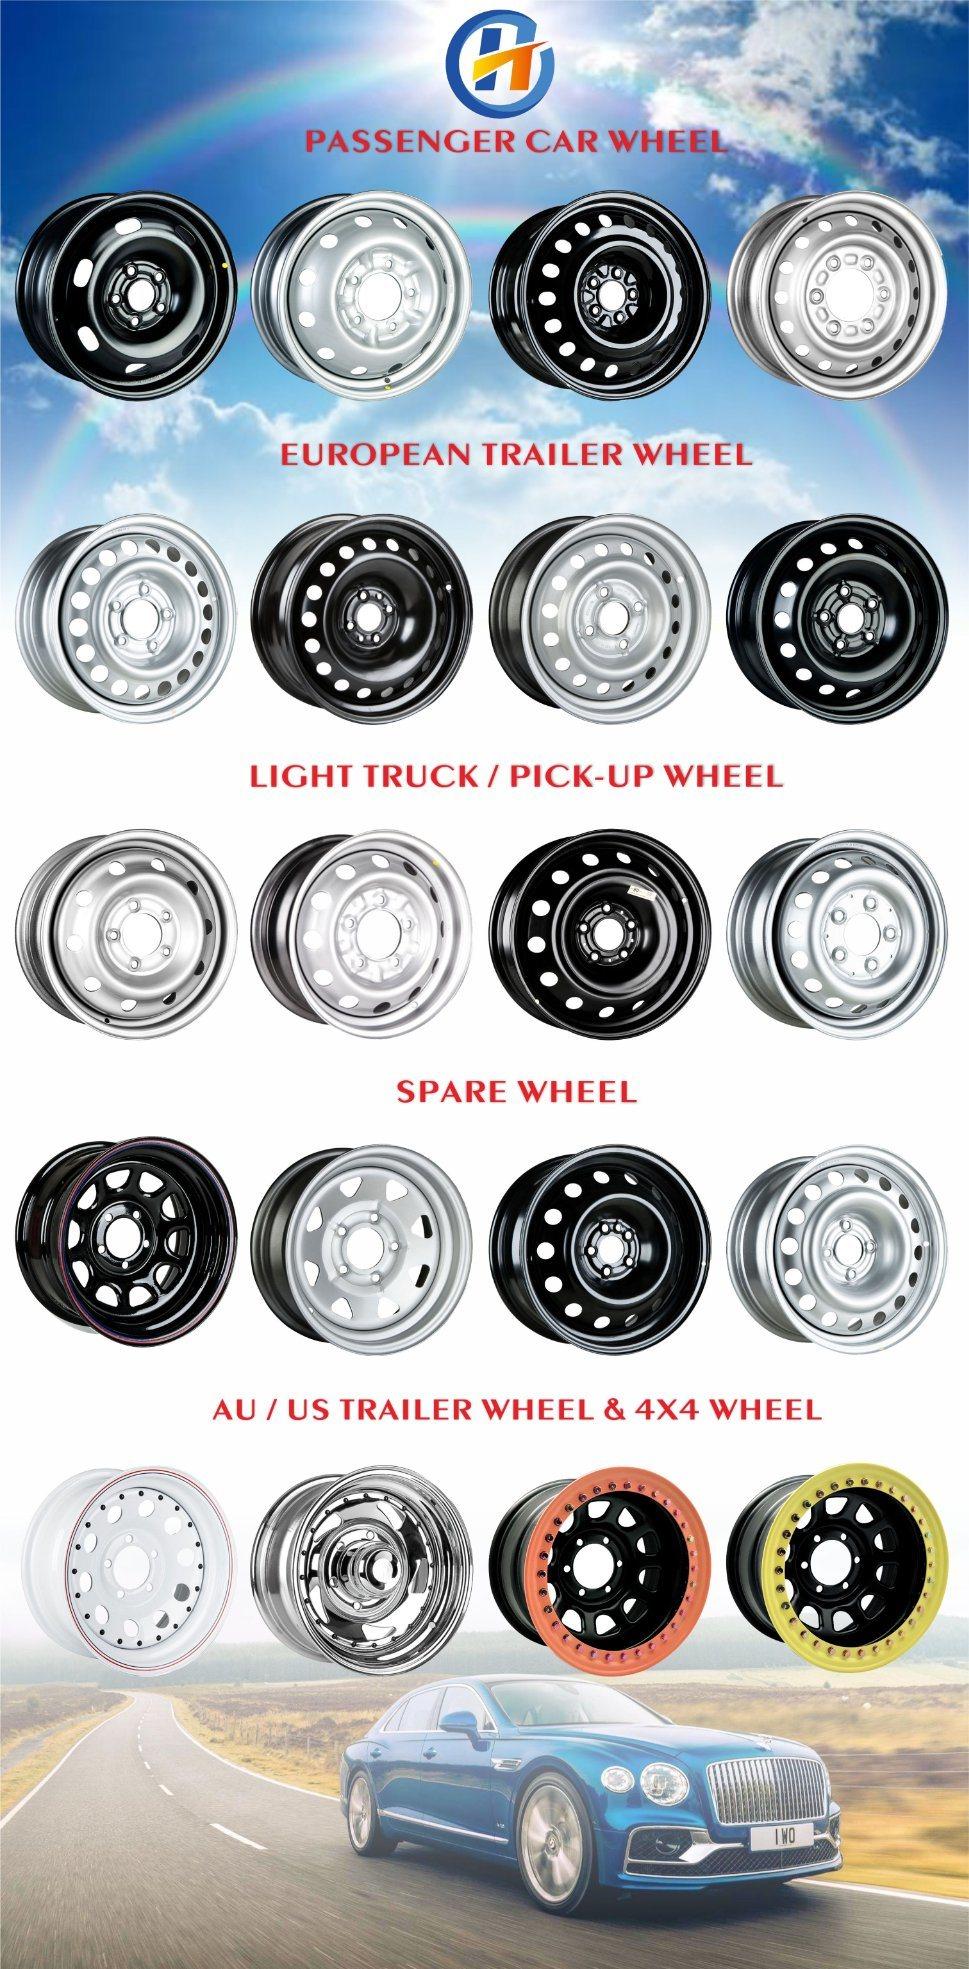 H&T Wheel 525101 15 Inch 15X4.0 PCD 5X98 Black Steel Spare Wheel